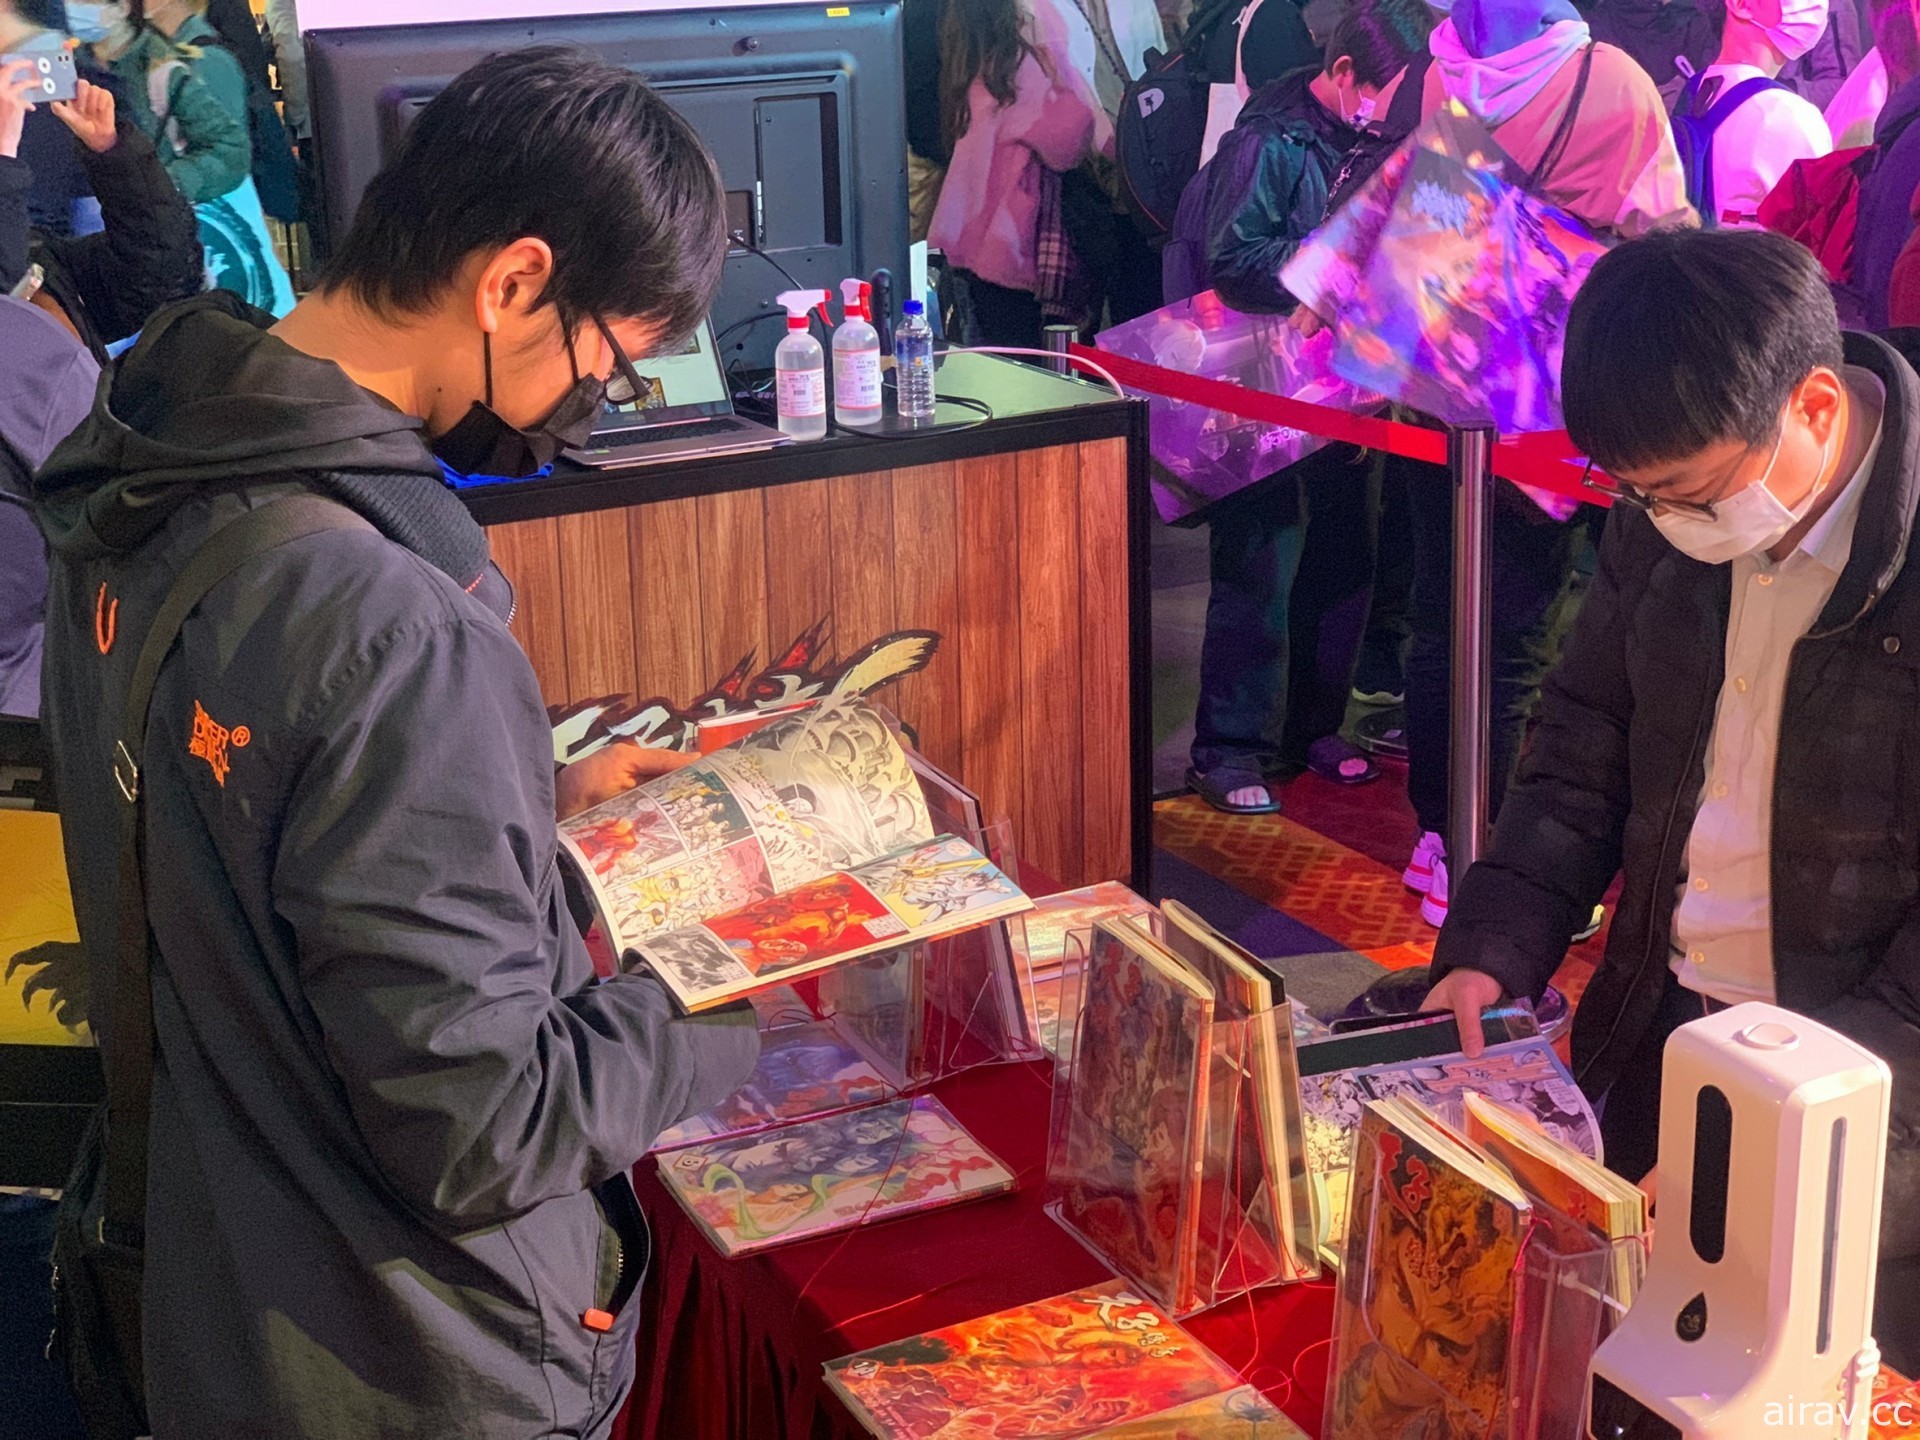 【TpGS 22】《天子傳奇 S》於台北電玩展登場 現場舉辦「即位大典」活動